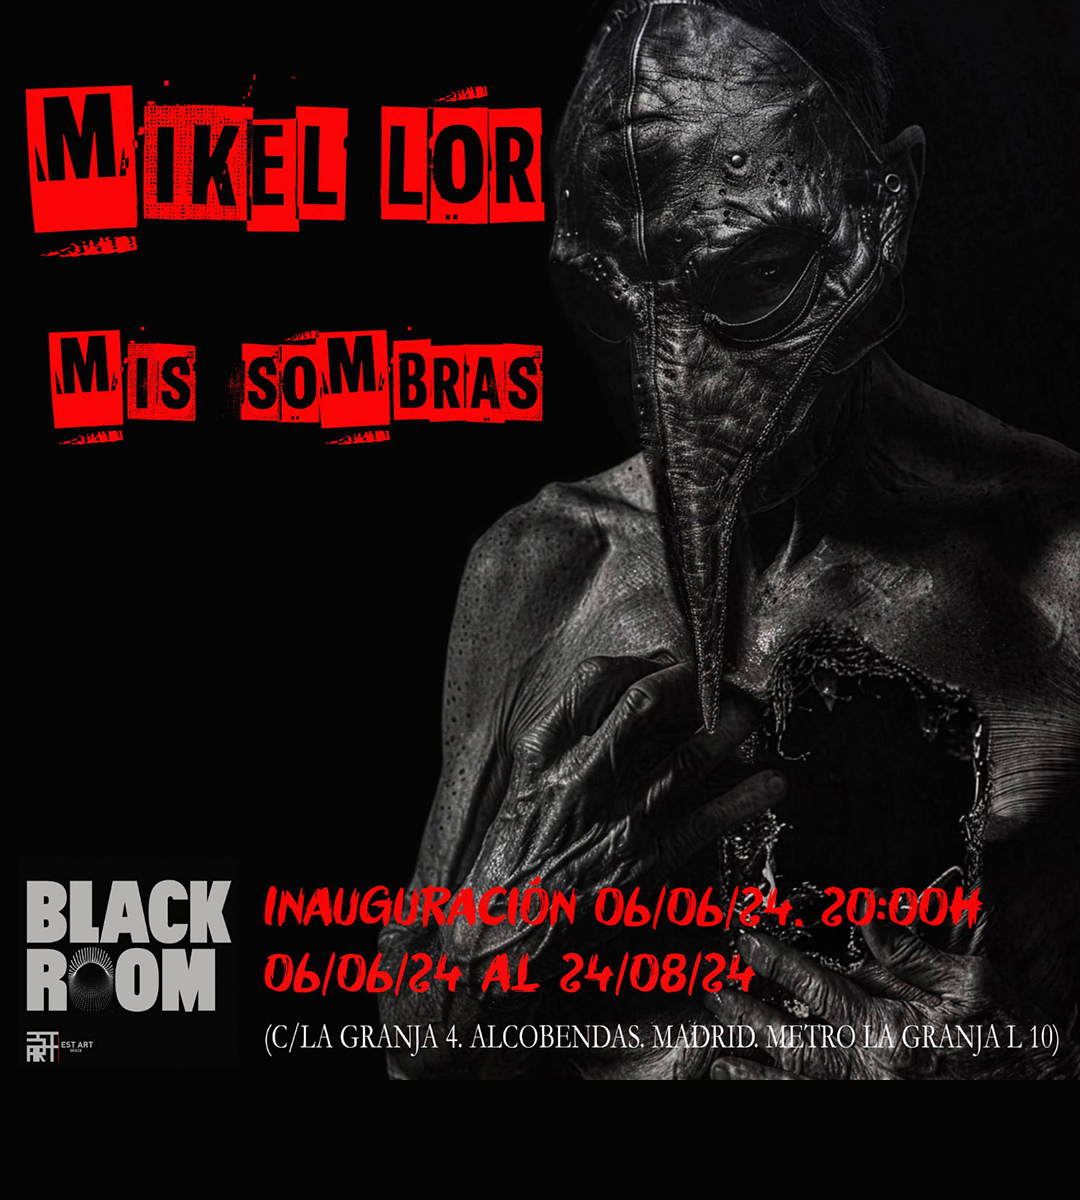 Mis sombras, Mikel Lor, BLACK ROOM, EST_ART Space Alcobendas, Madrid